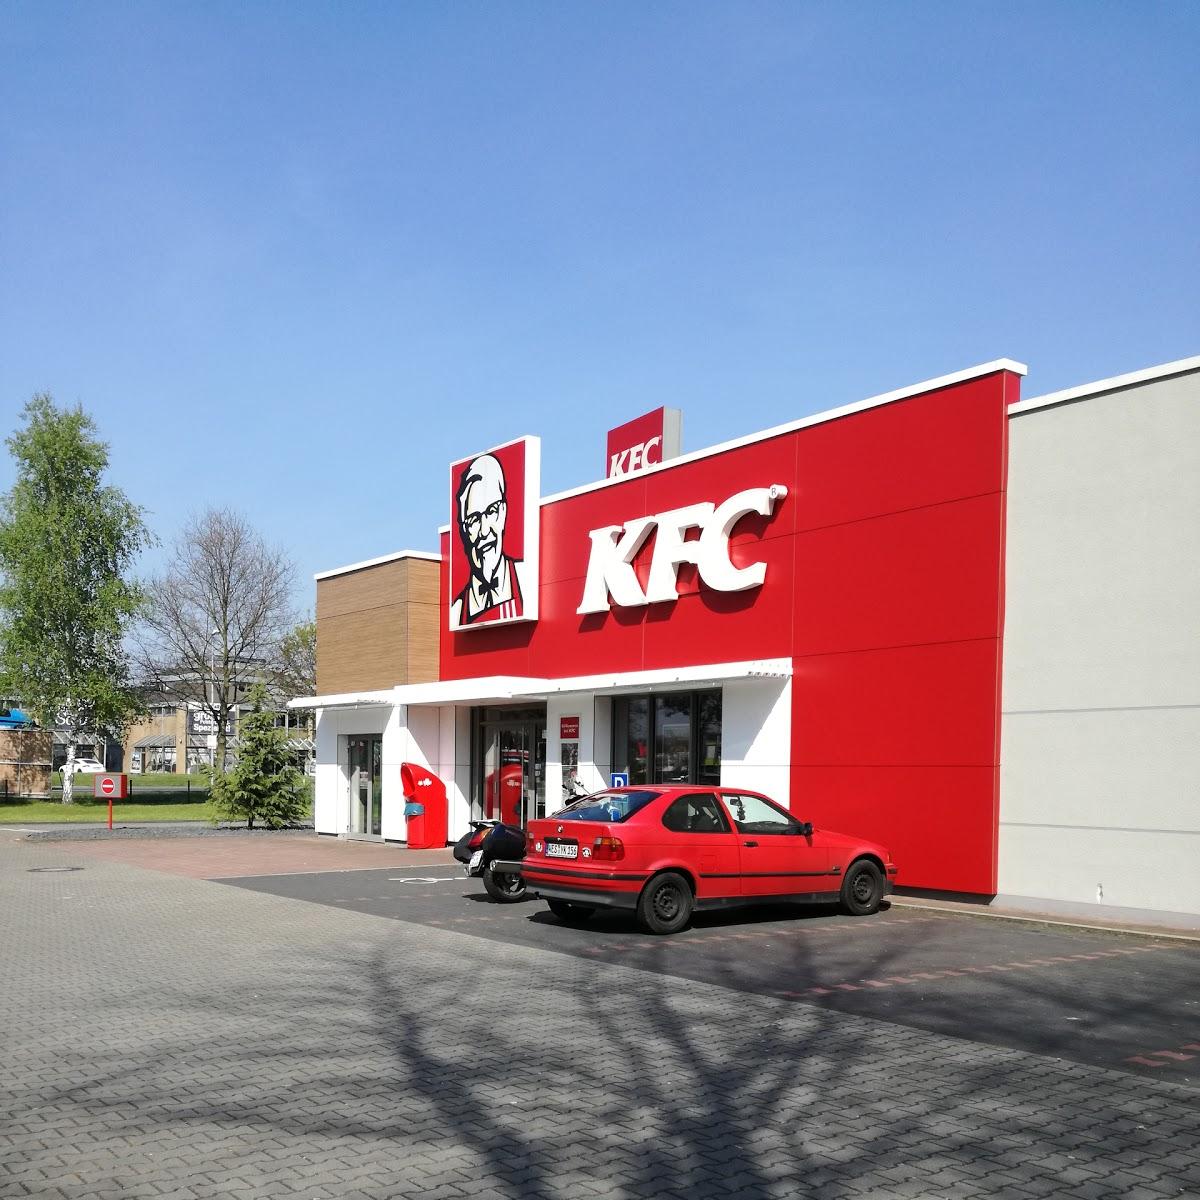 Restaurant "Kentucky Fried Chicken" in Wesel